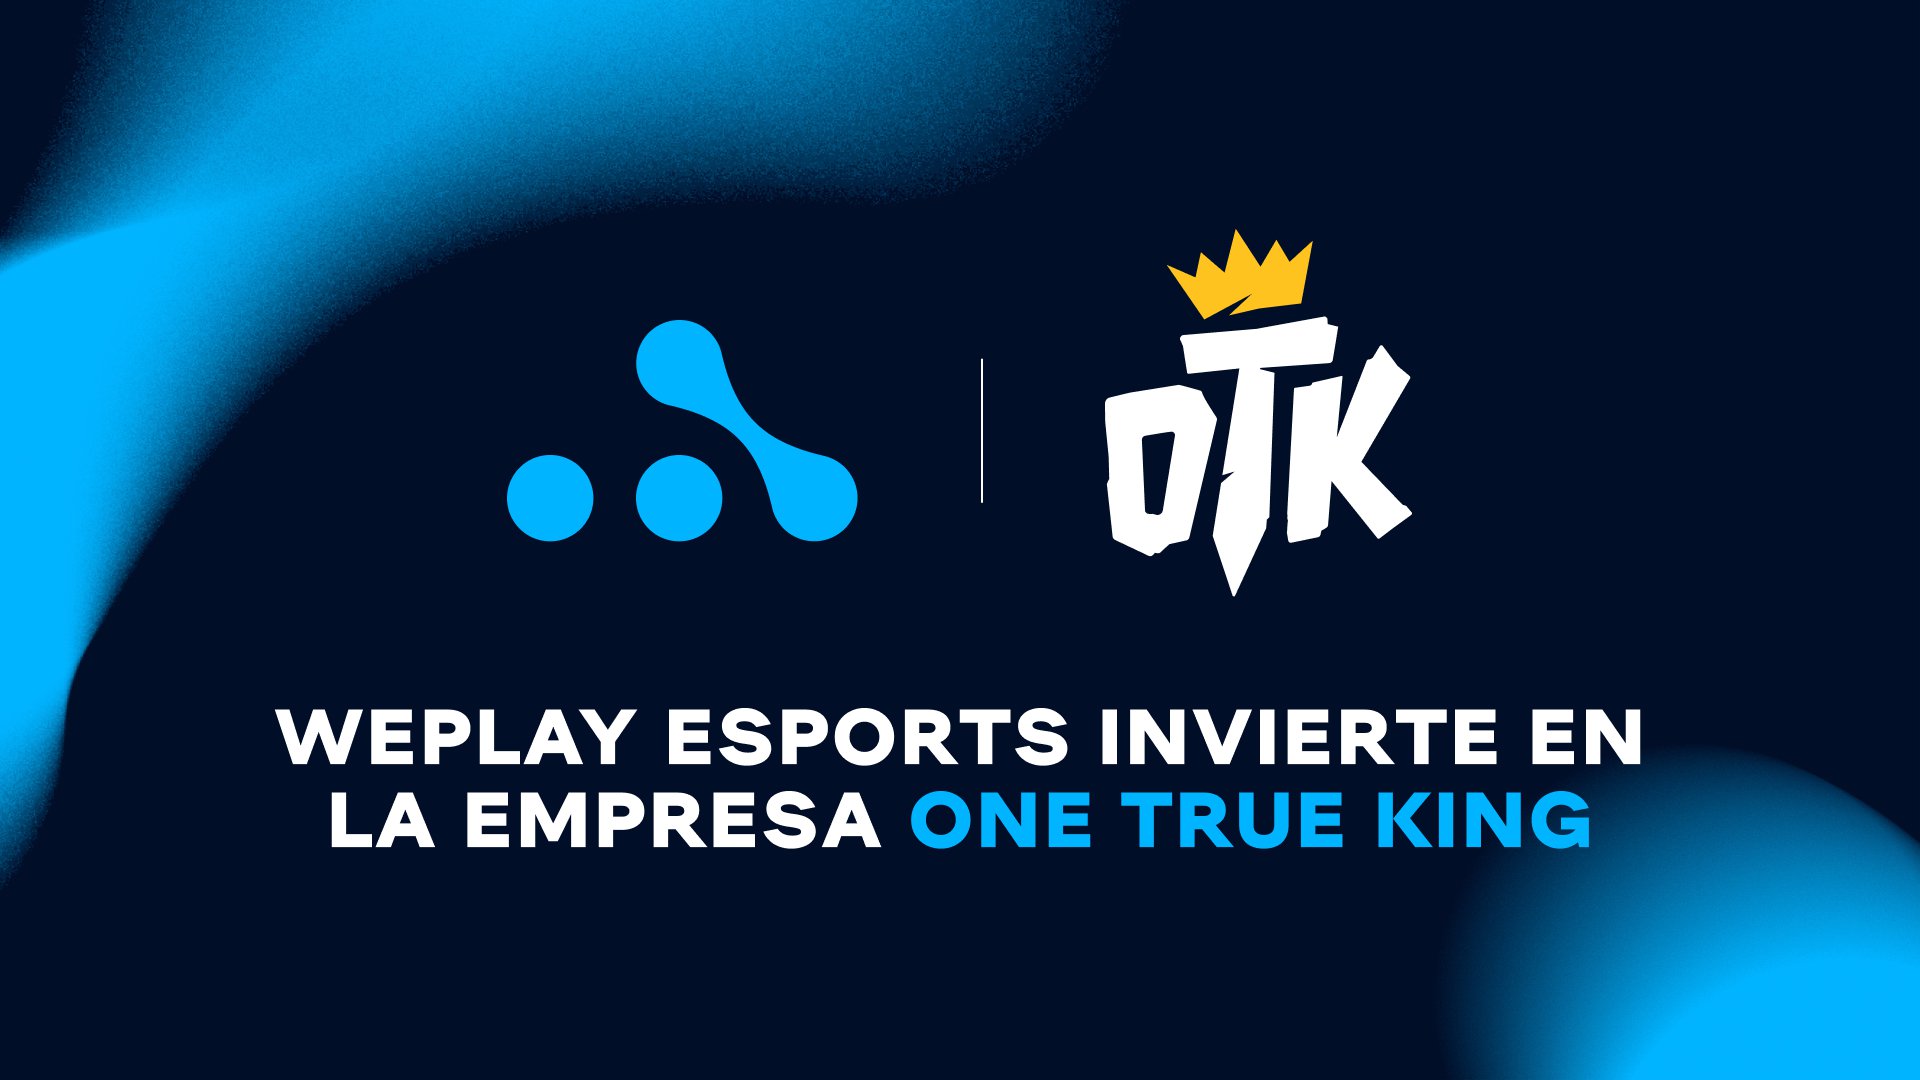 WePlay Esports invierte en la empresa One True King. Imagen: WePlay Holding